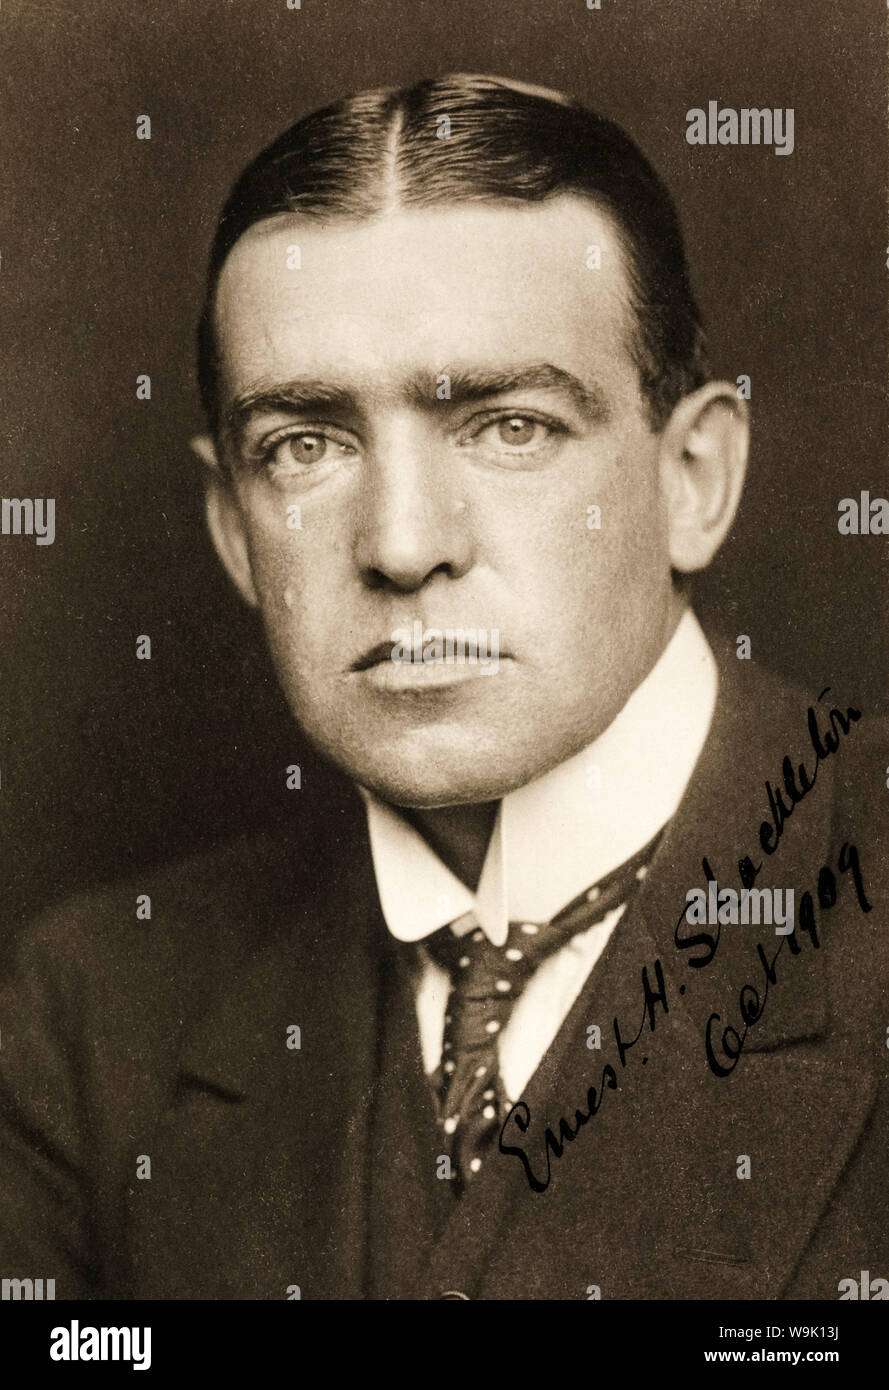 Sir Ernest Henry Shackleton (1874-1922), portrait photograph, before 1909 Stock Photo